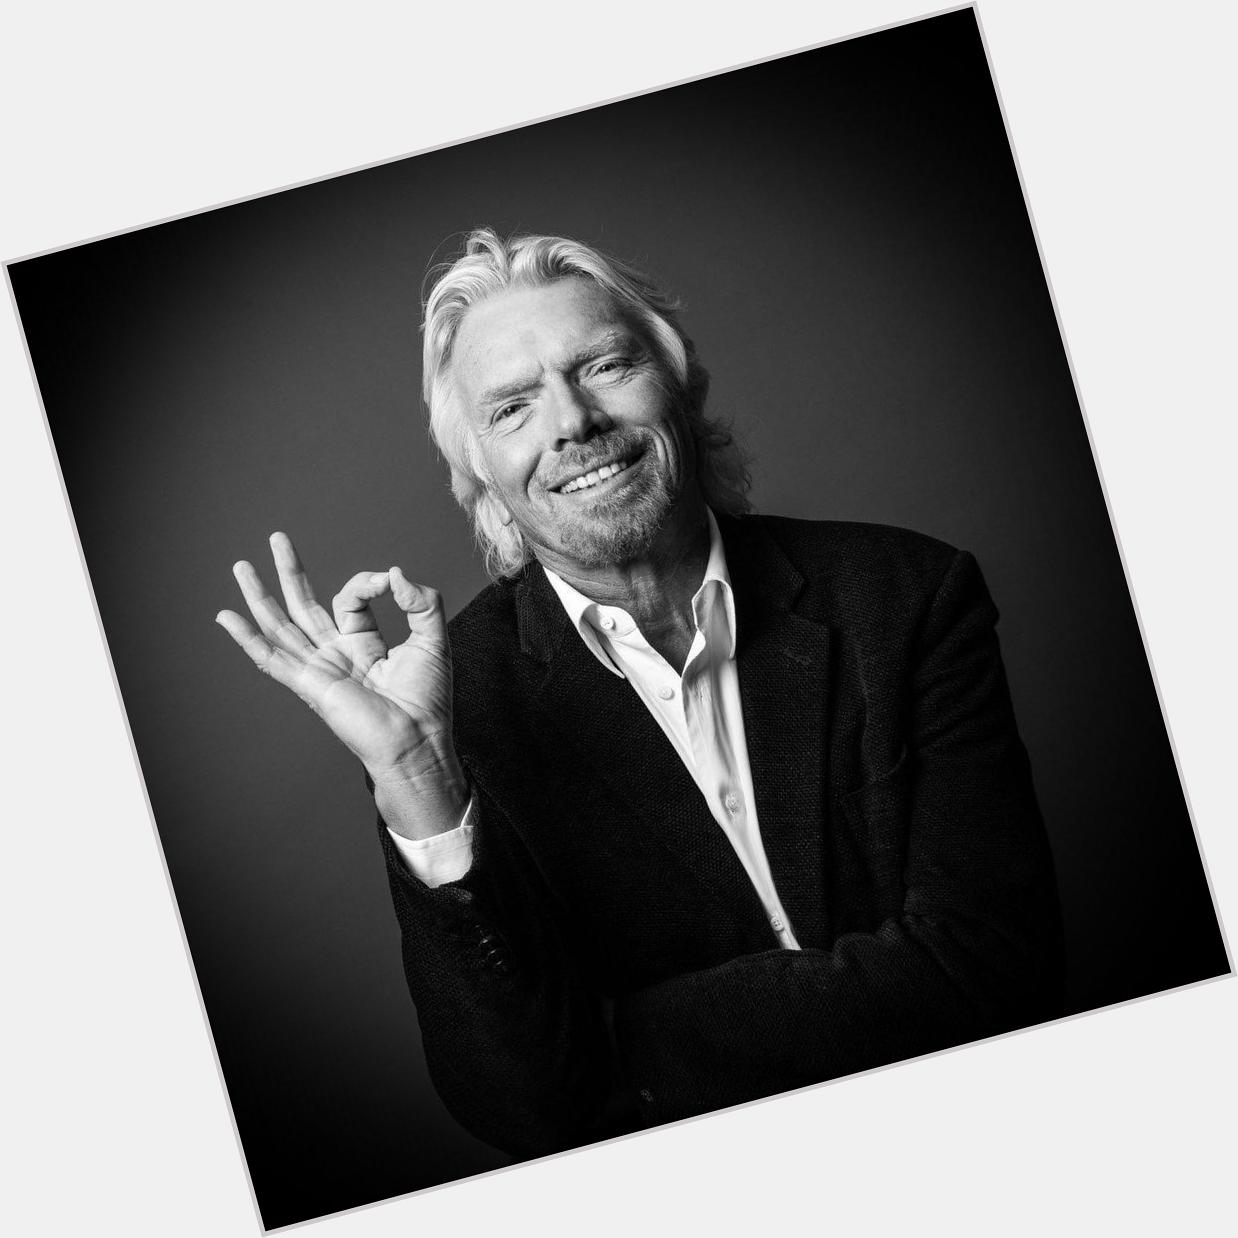 Richard Branson has reached retirement age - 65 today! Happy birthday 